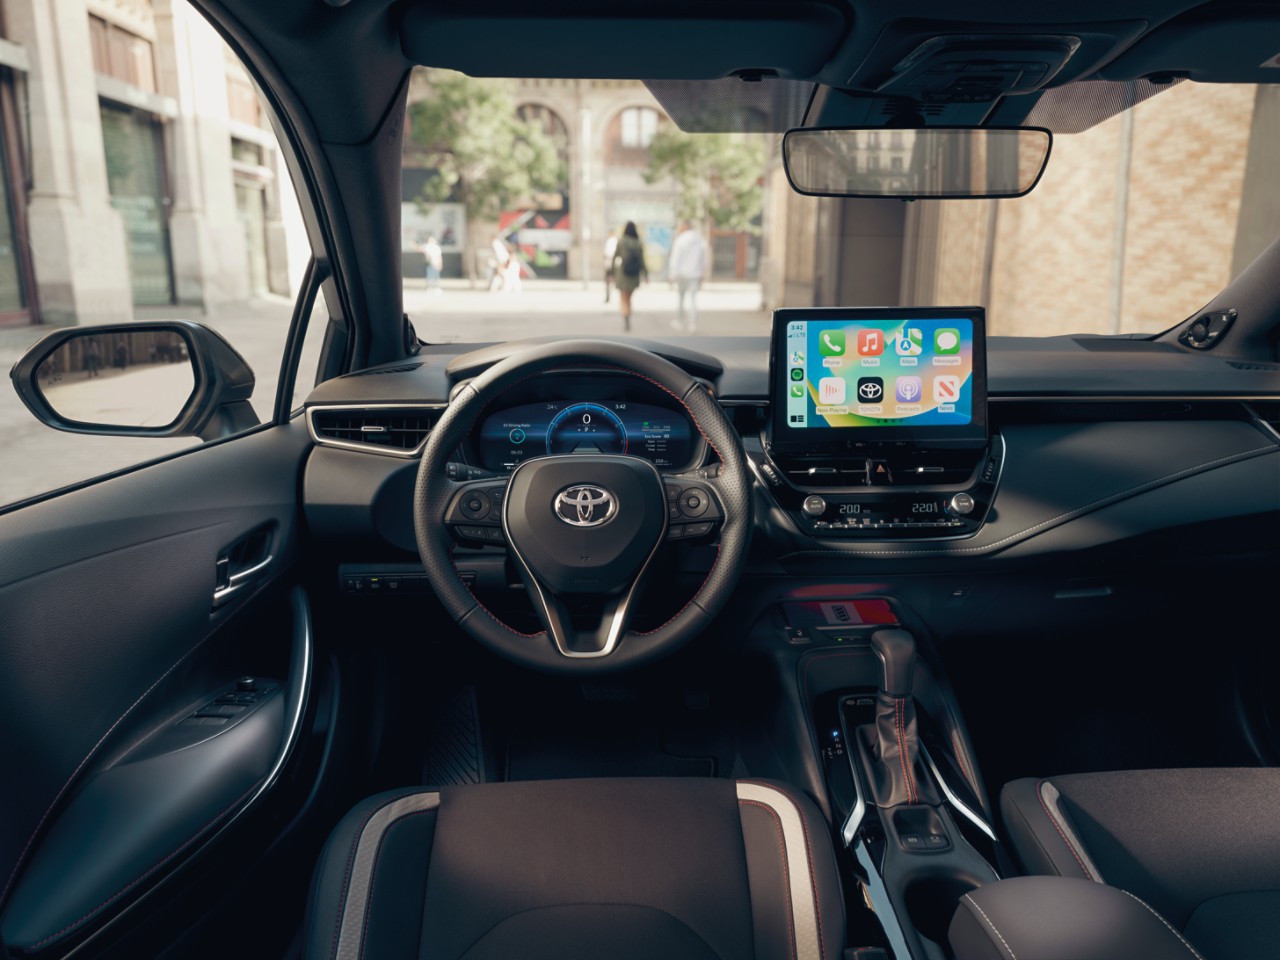 Toyota Corolla Hatchback interior